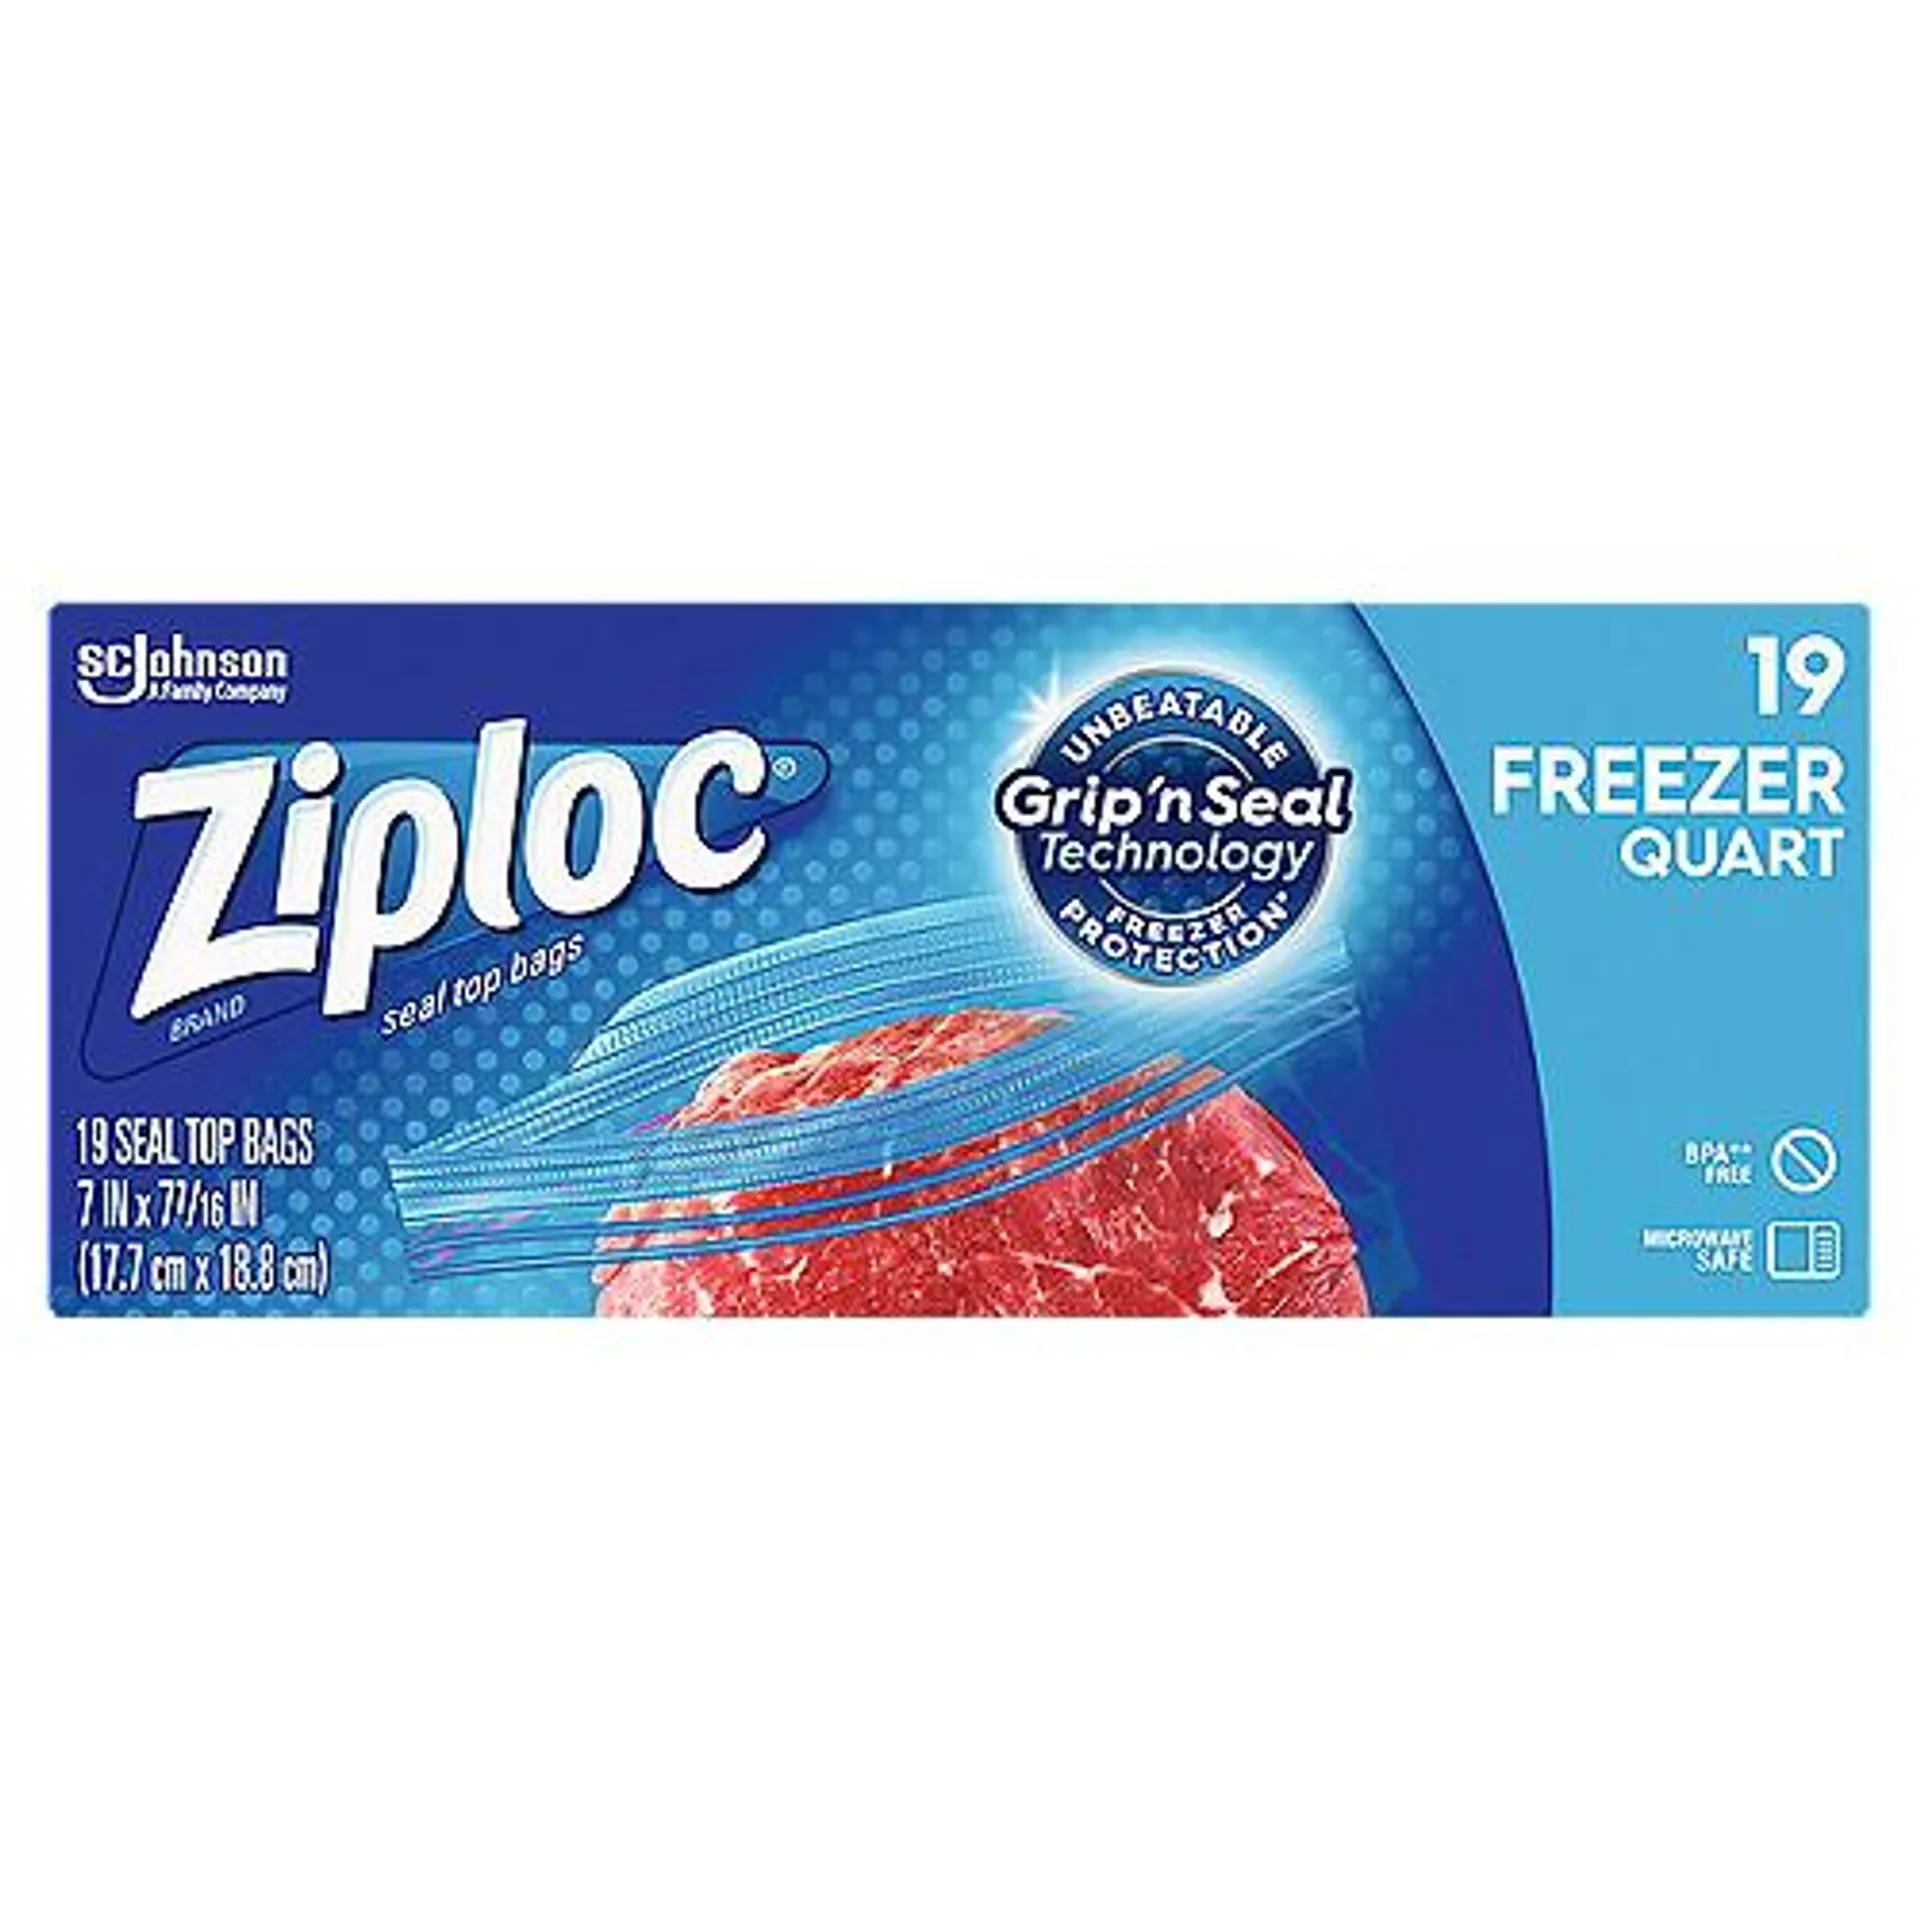 Ziploc Brand Freezer Quart with Grip 'n Seal Technology, Bags, 19 Each